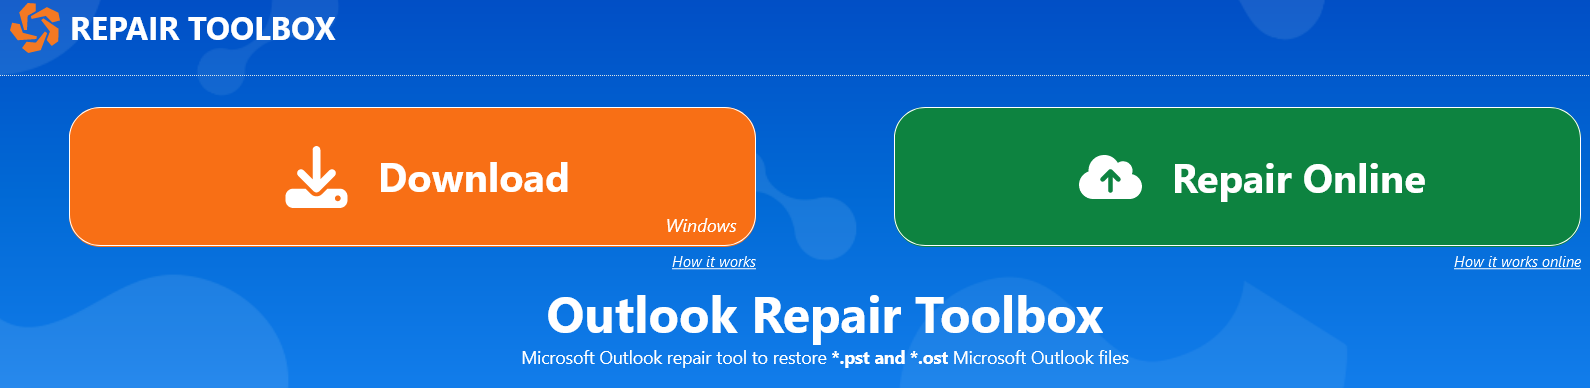 OST Repair Toolbox - Outlook OST Repair Tool